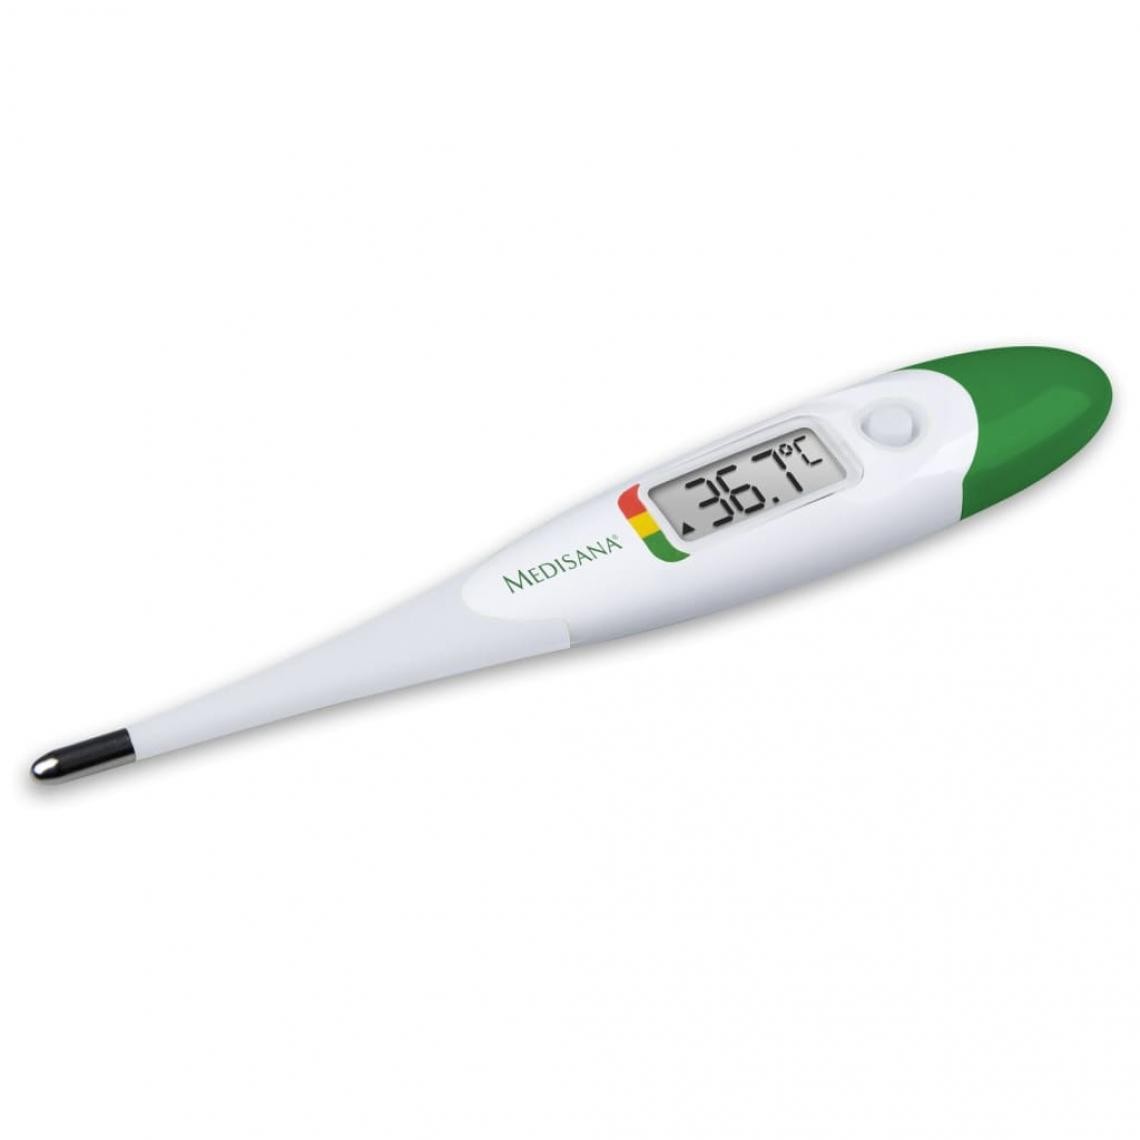 Medisana - Medisana Thermomètre TM 705 Blanc - Appareils de mesure